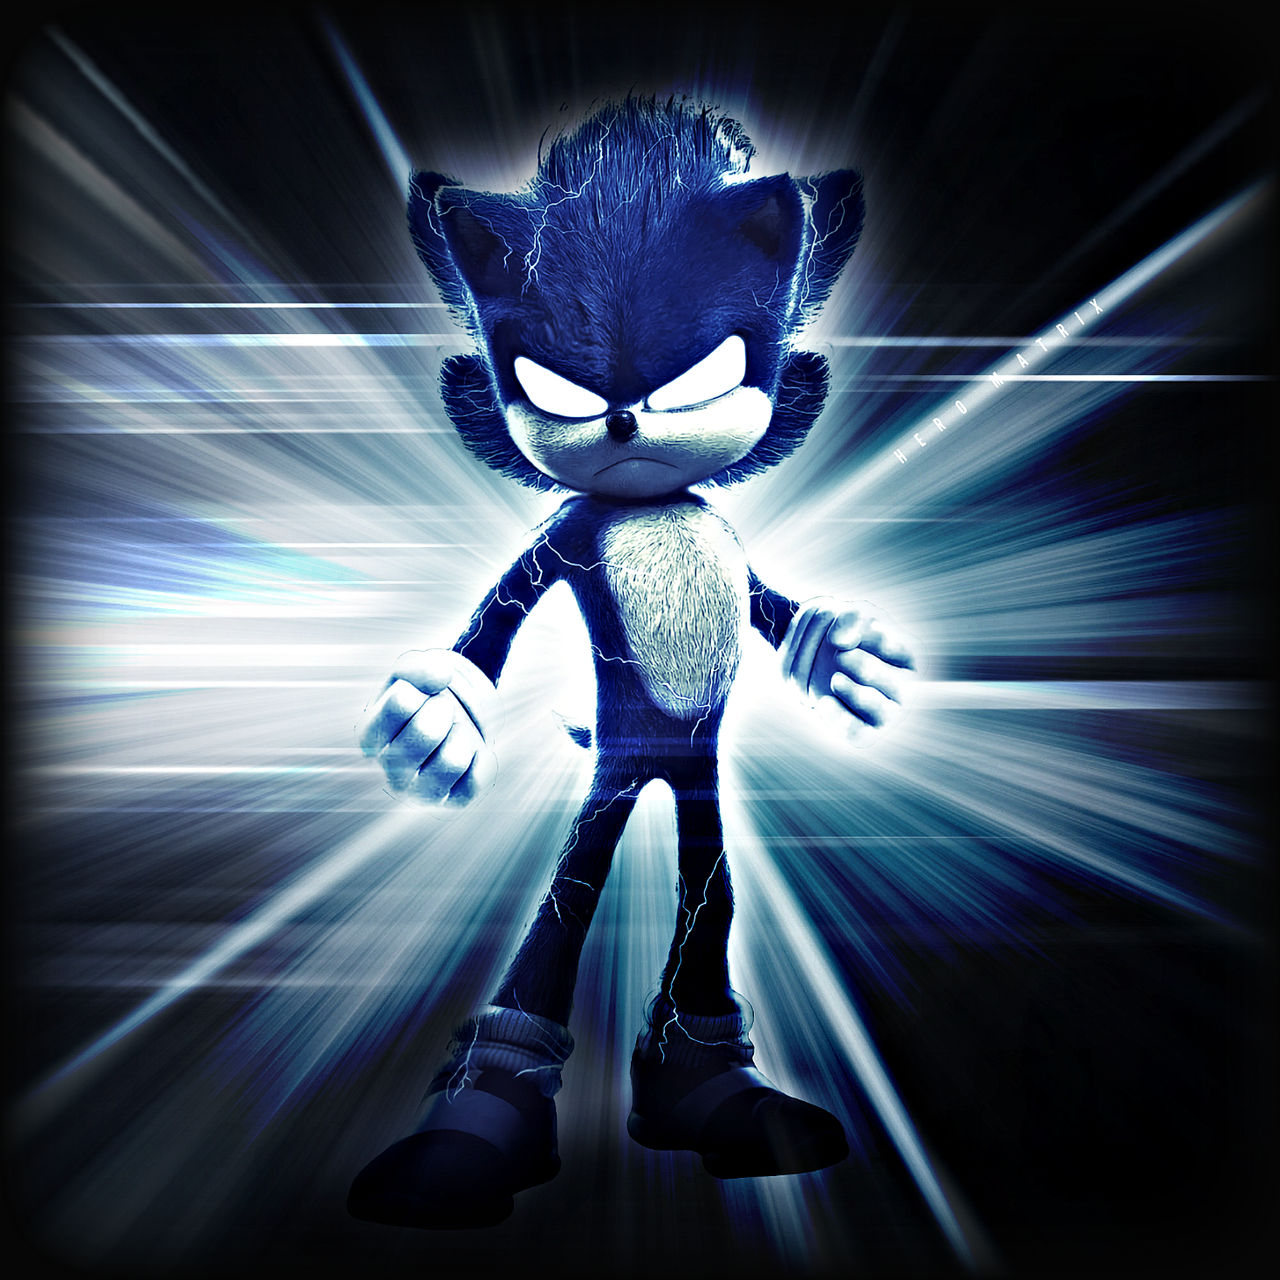 Dark Sonic by Prime-101 on DeviantArt